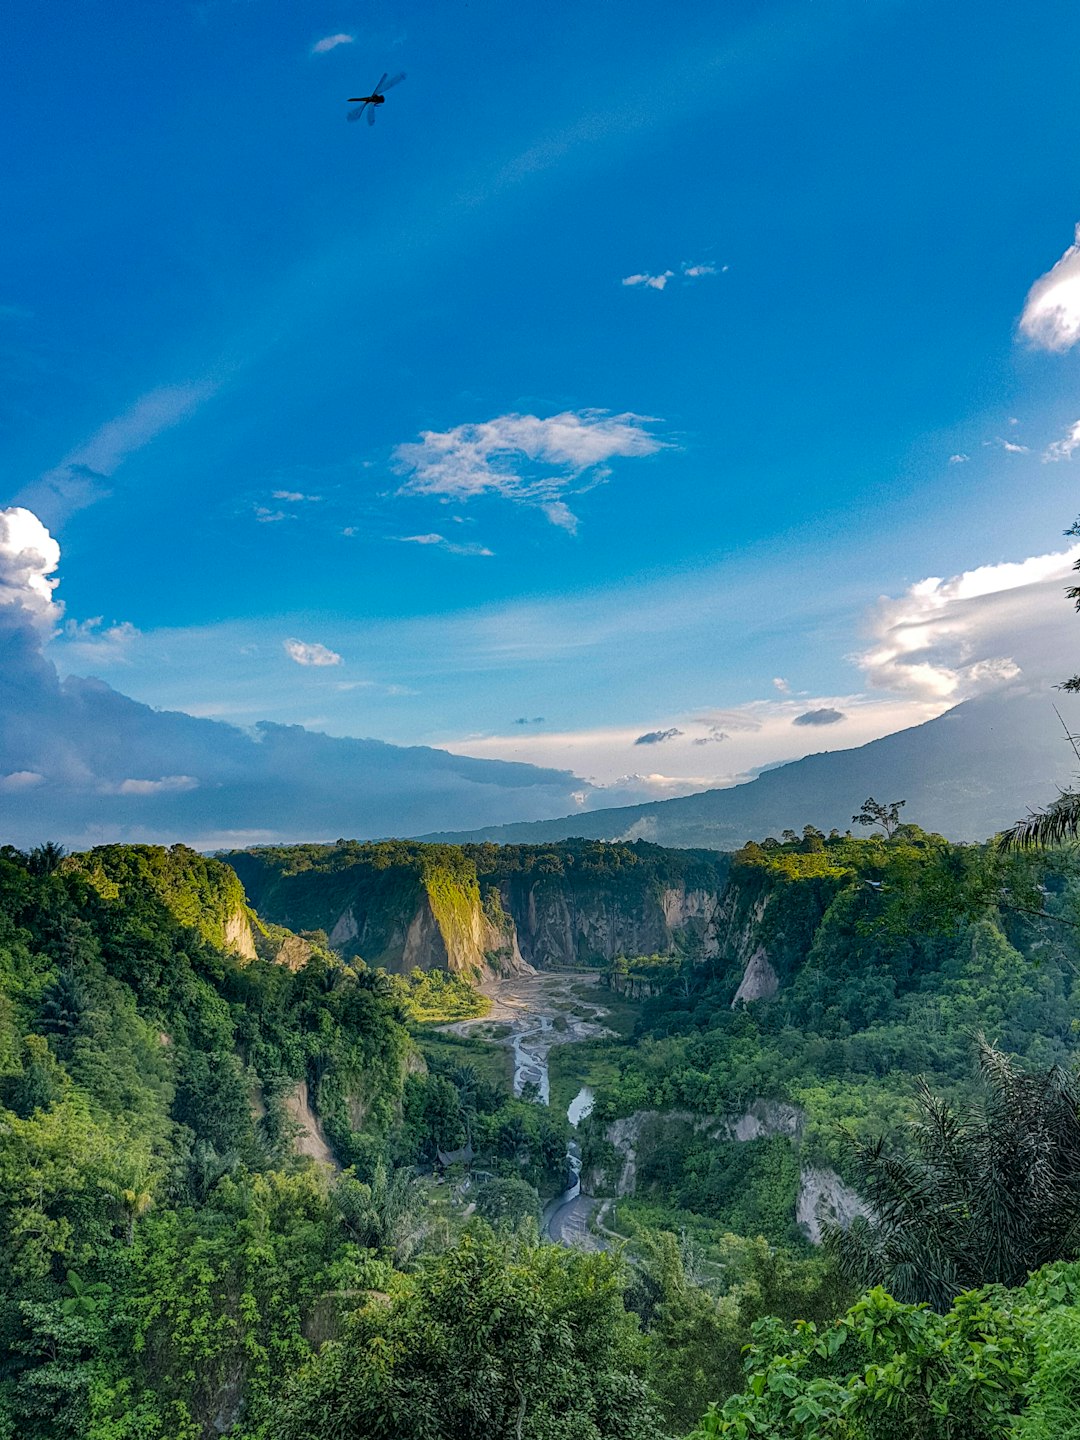 travelers stories about Waterfall in Ngarai Sianok, Indonesia